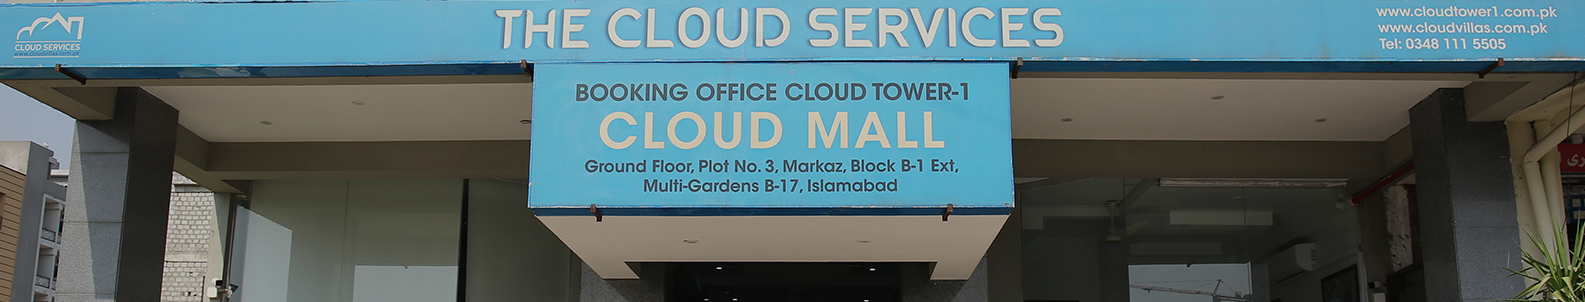  The Cloud Services, Head Office Building, Plaza No. 3 , Markaz, Block B-1 Ext, Multi-Gardens B-17,
Islamabad